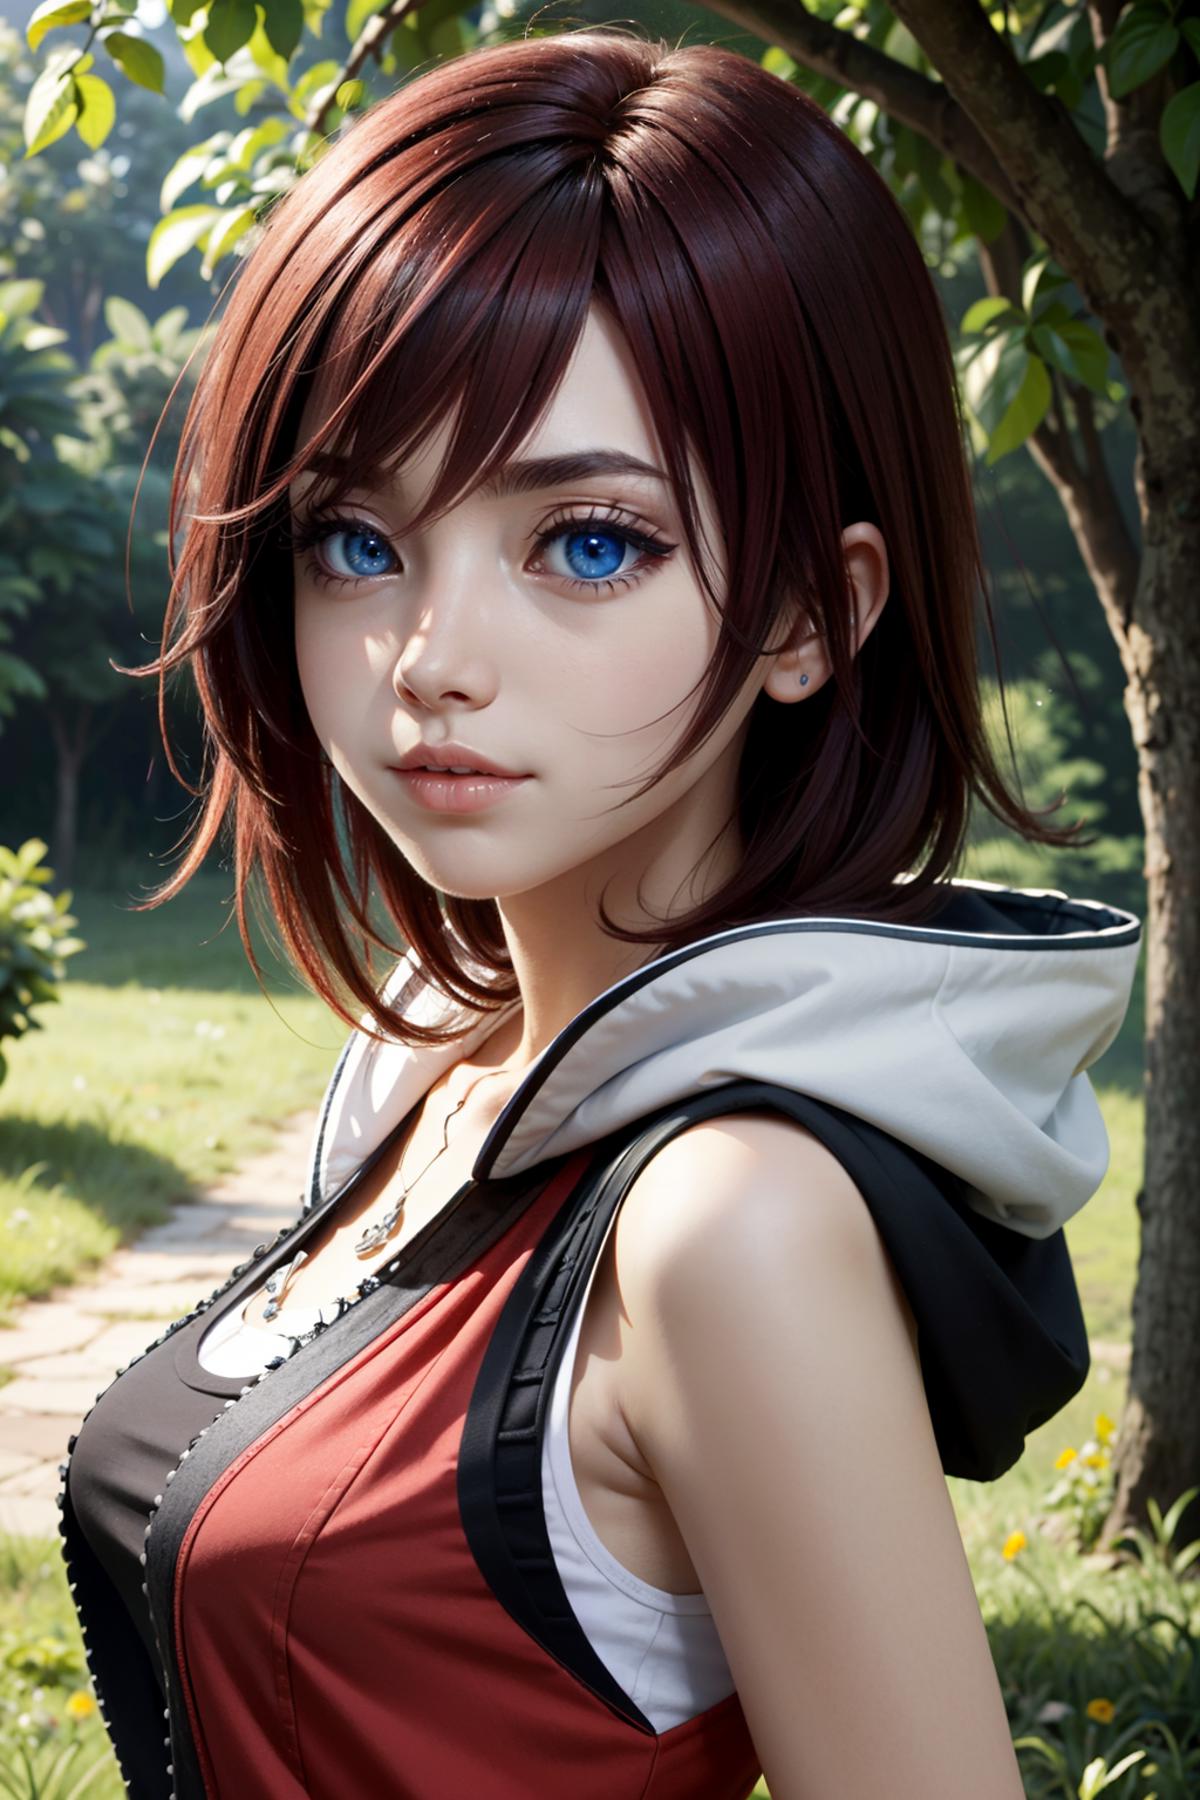 Kairi from Kingdom Hearts image by BloodRedKittie